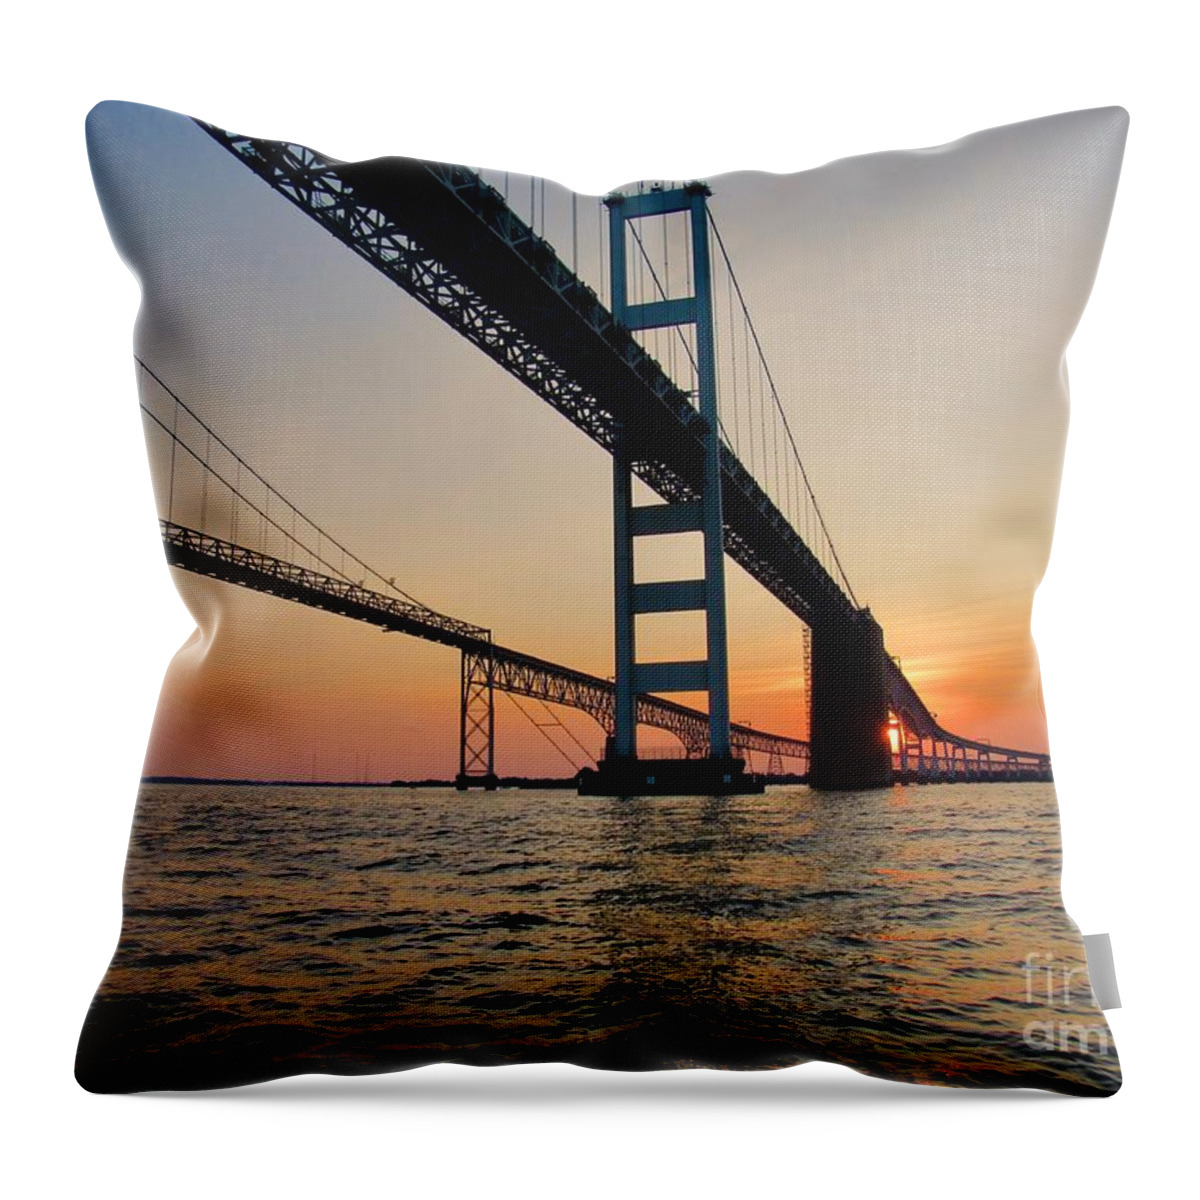 Chesapeake Bay Bridge Throw Pillow featuring the photograph Bay Bridge by Nancy Patterson